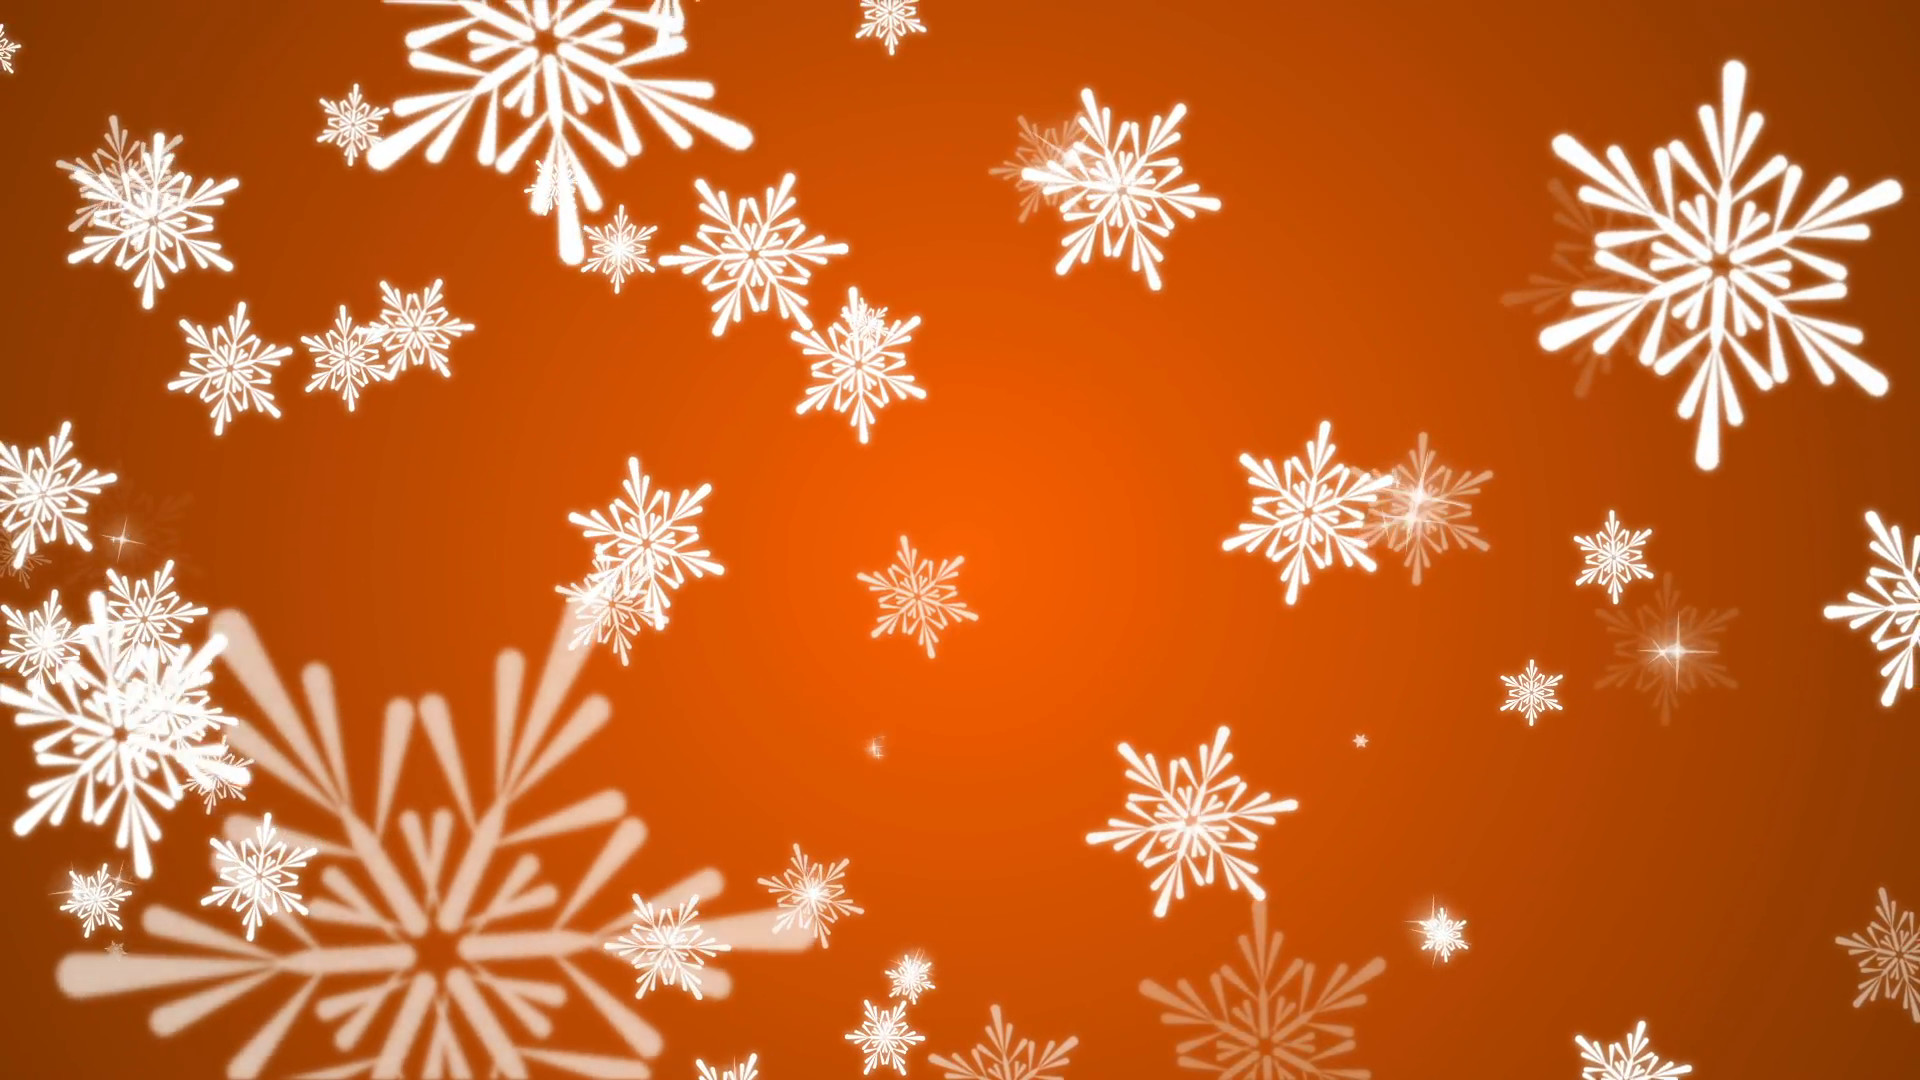 1920x1080 Animated Falling Snow Flakes on a Orange Background Motion Background -  VideoBlocks